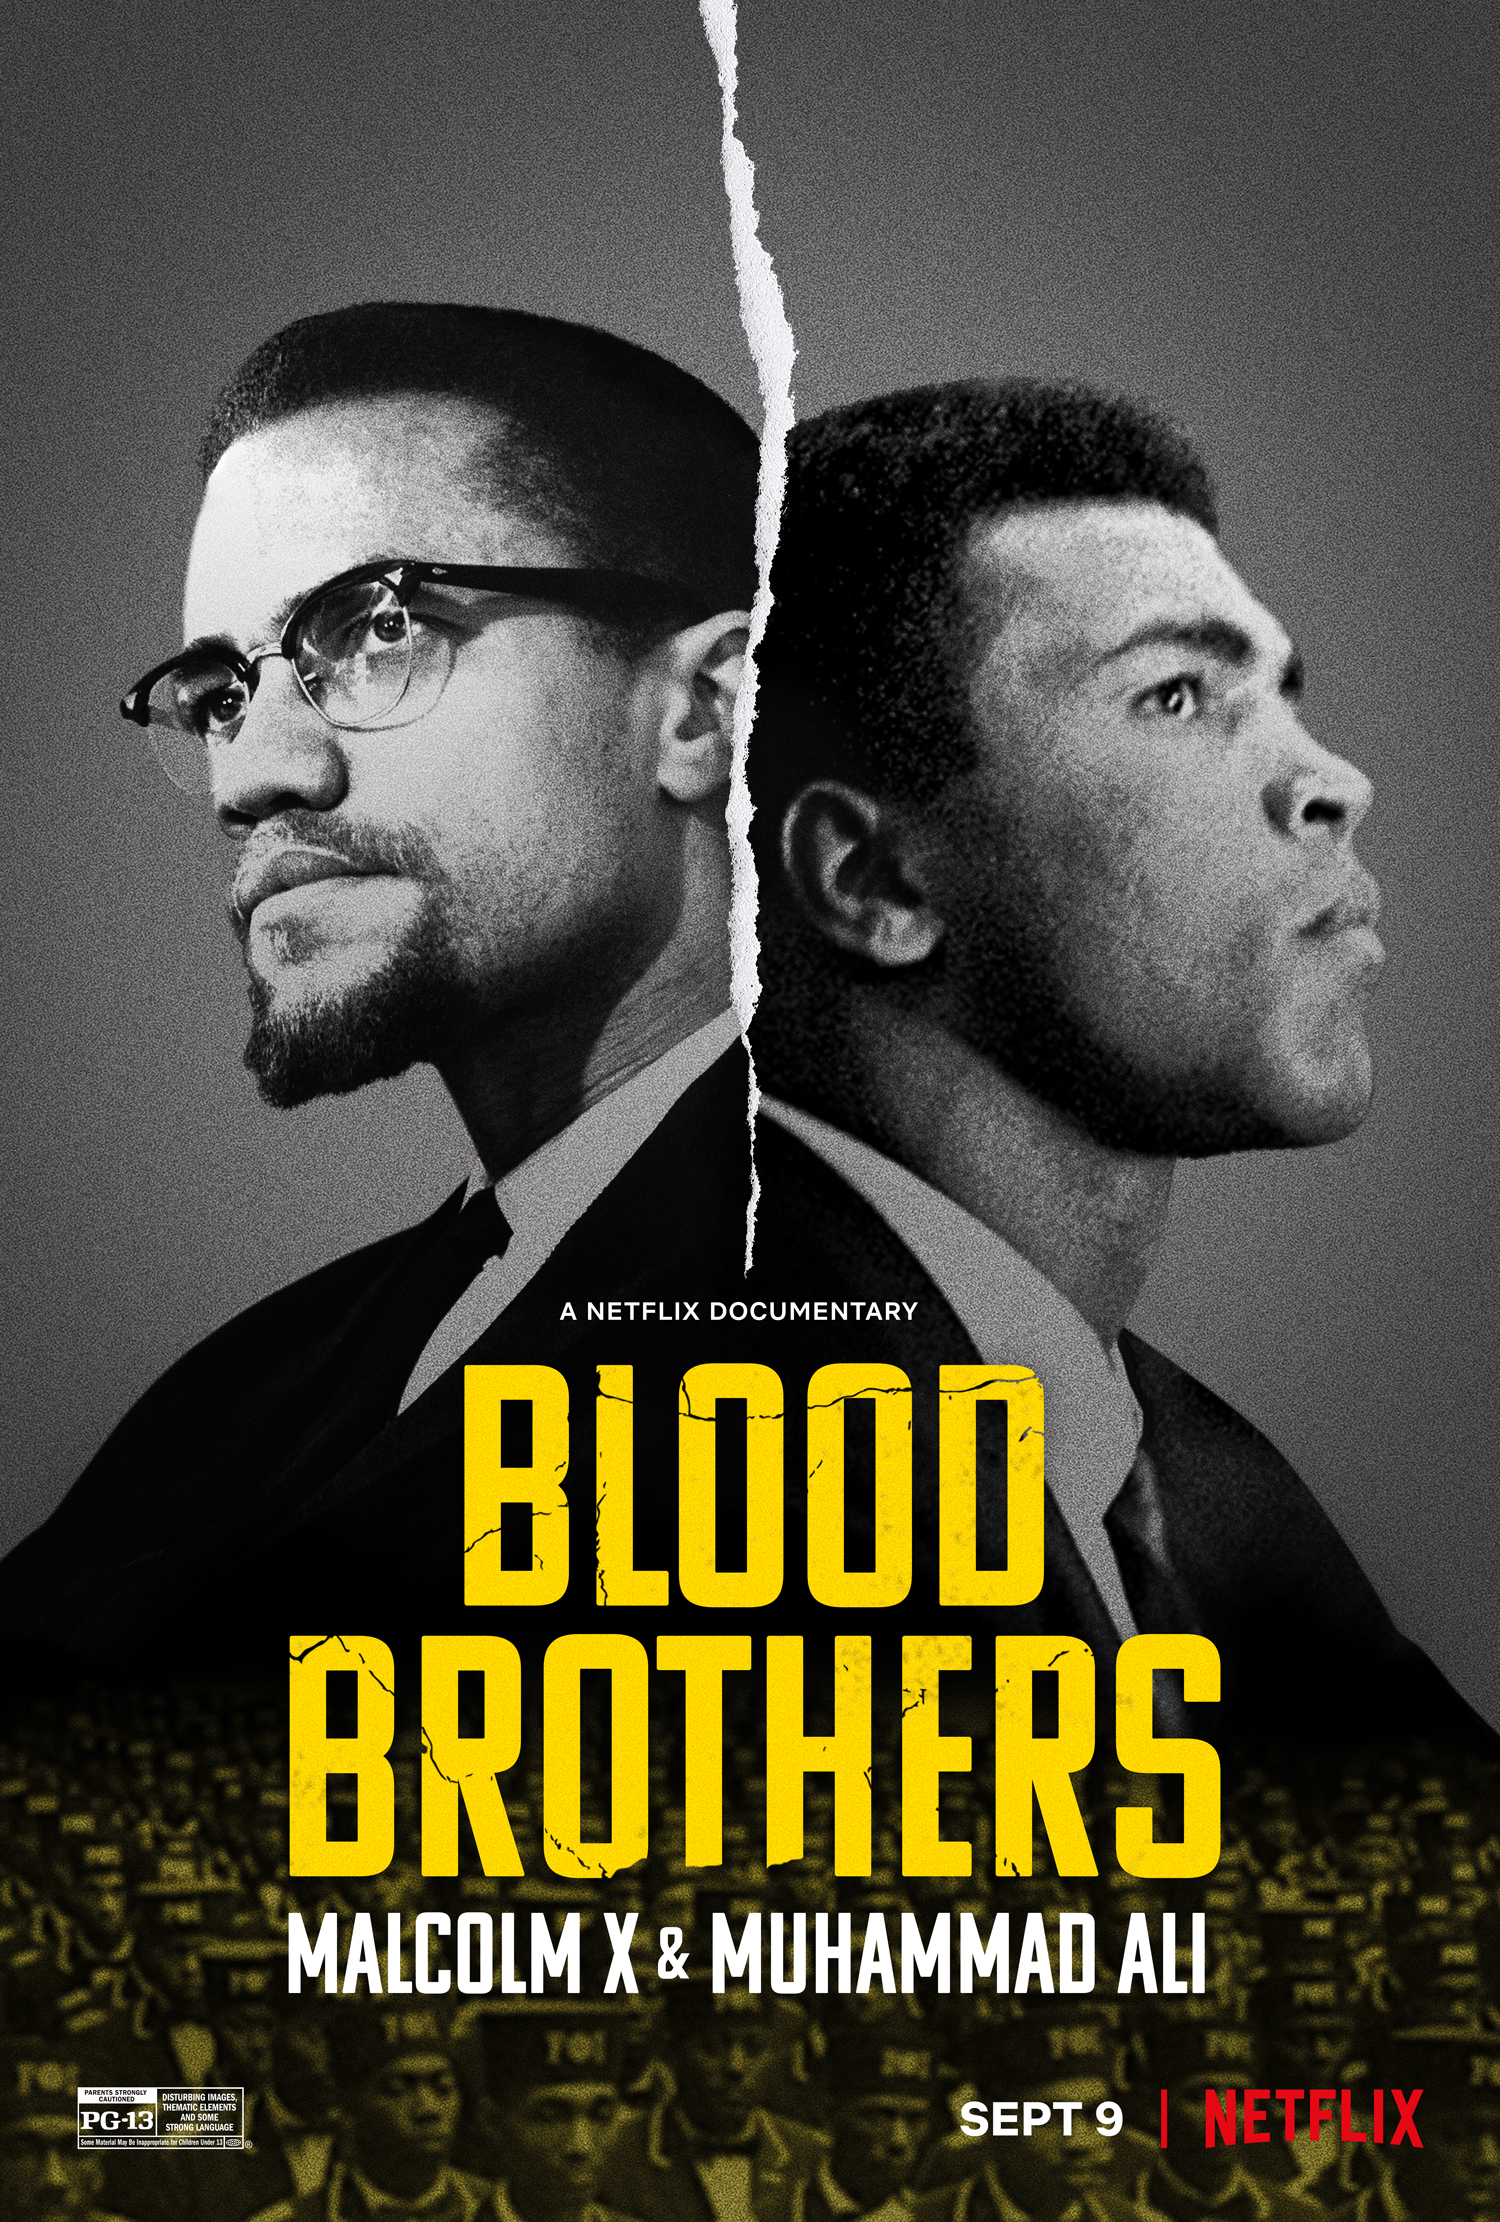 Poster Phim Anh em kết nghĩa: Malcolm X & Muhammad Ali (Blood Brothers: Malcolm X & Muhammad Ali)